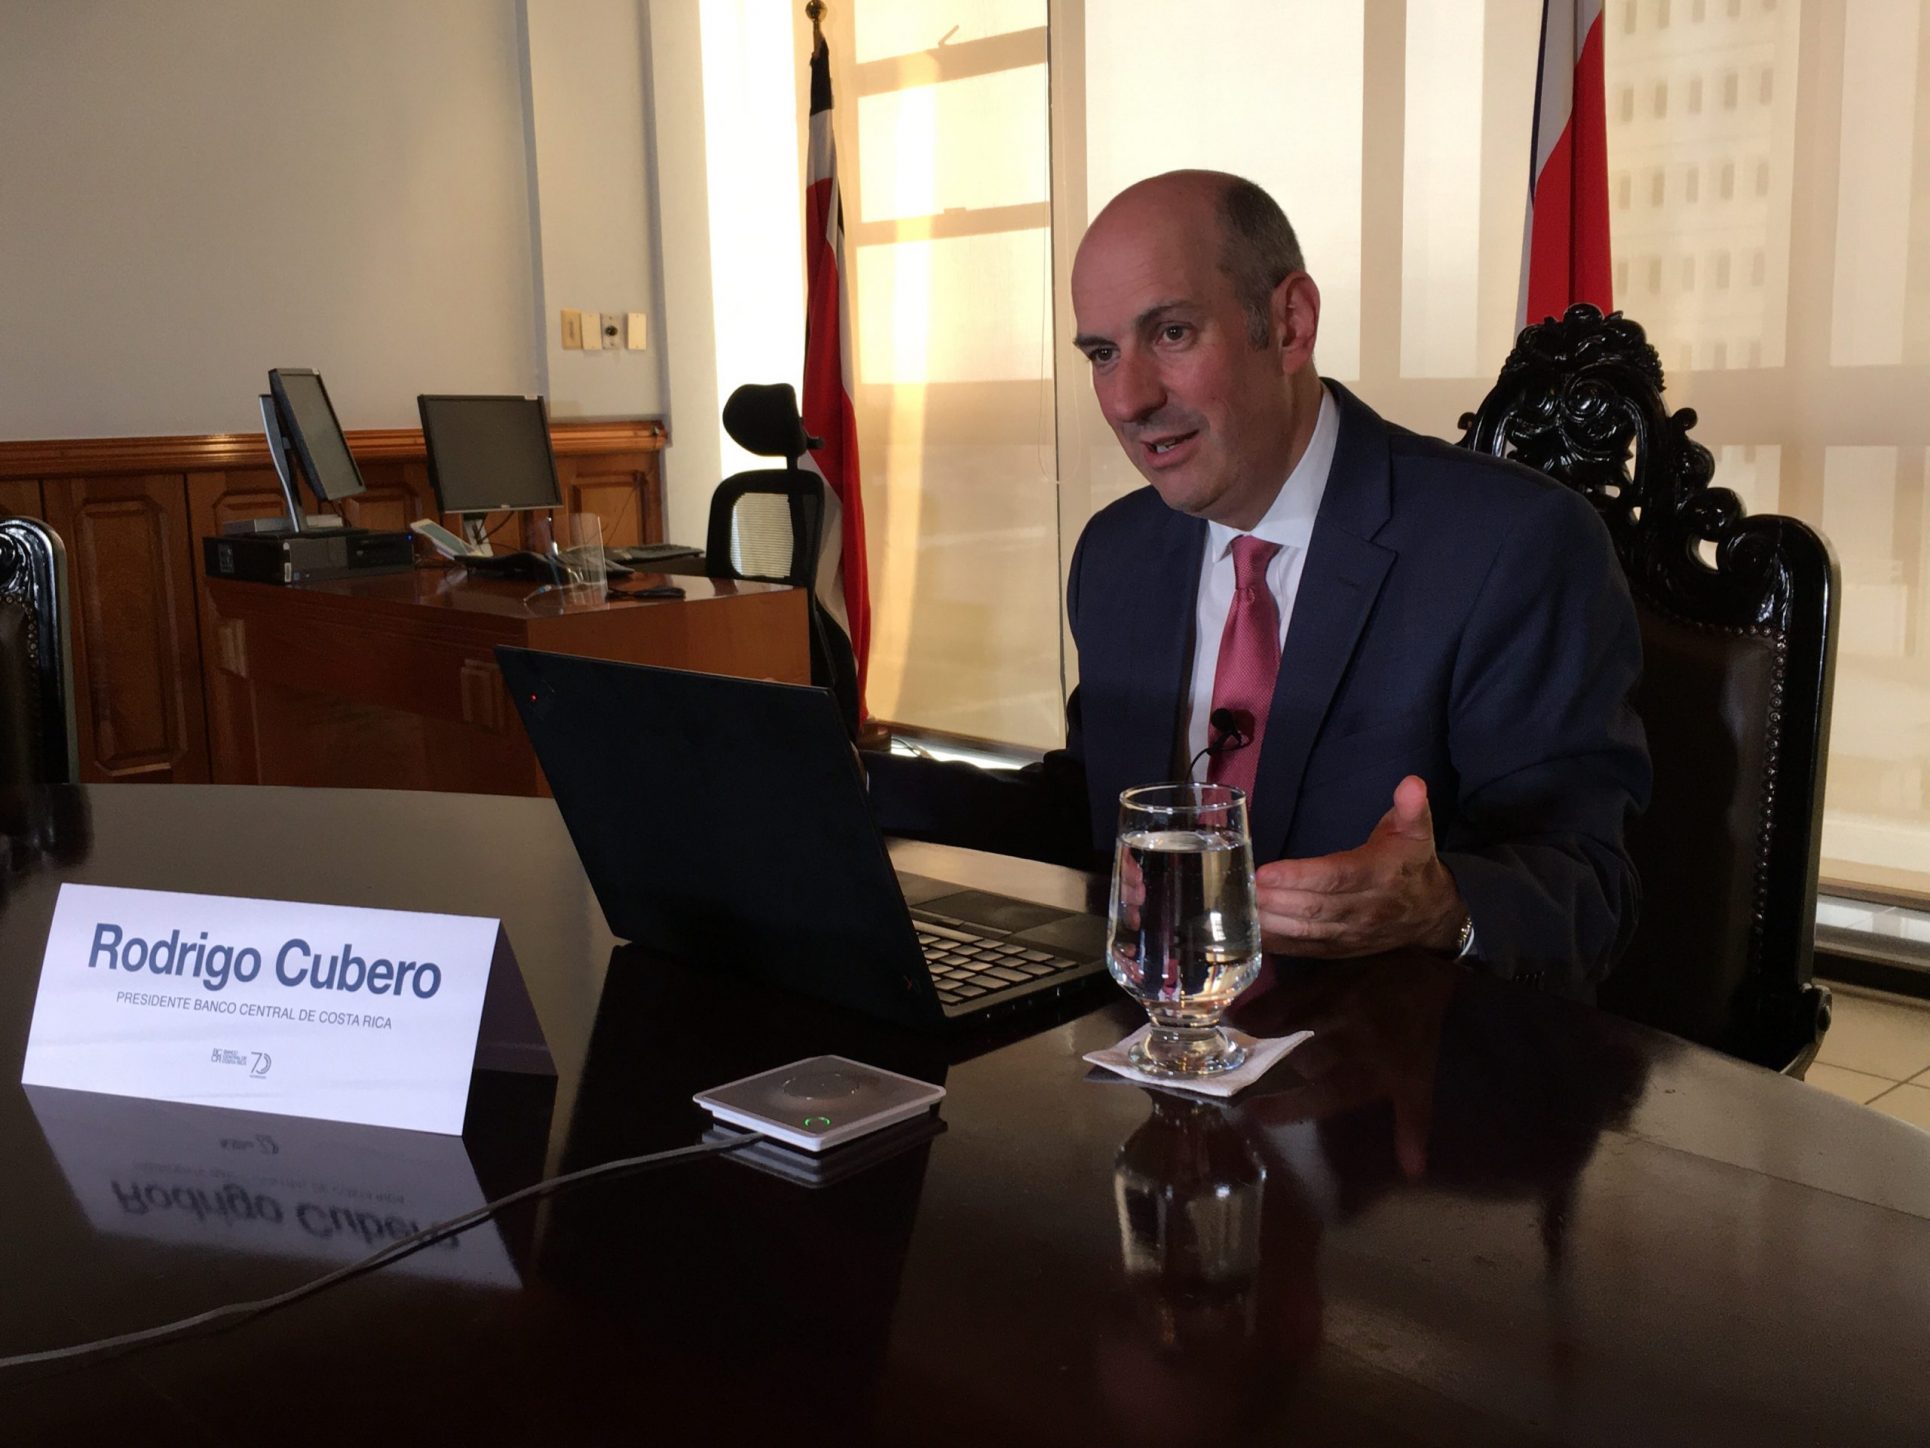 Expresidente del Banco Central Rodrigo Cubero inicia labores en firma de asesoría para empresas